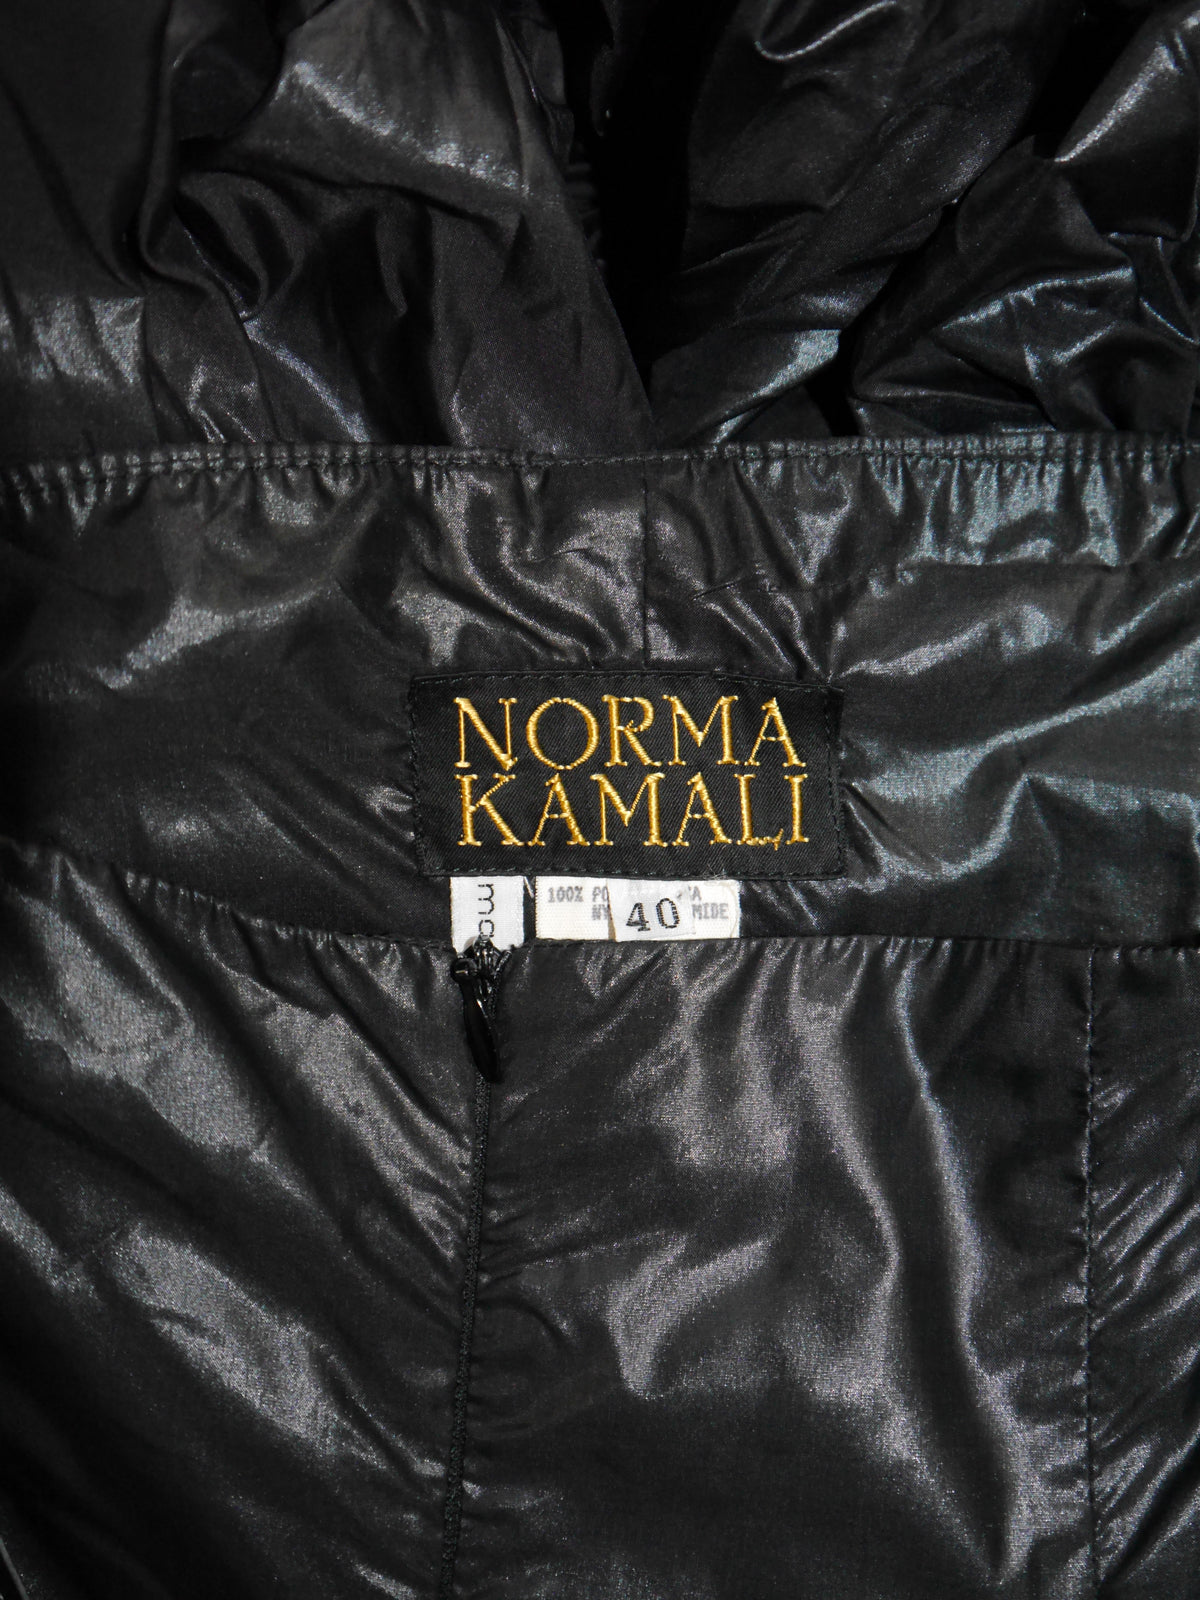 NORMA KAMALI 1980s Vintage Black Nylon Parachute Skirt